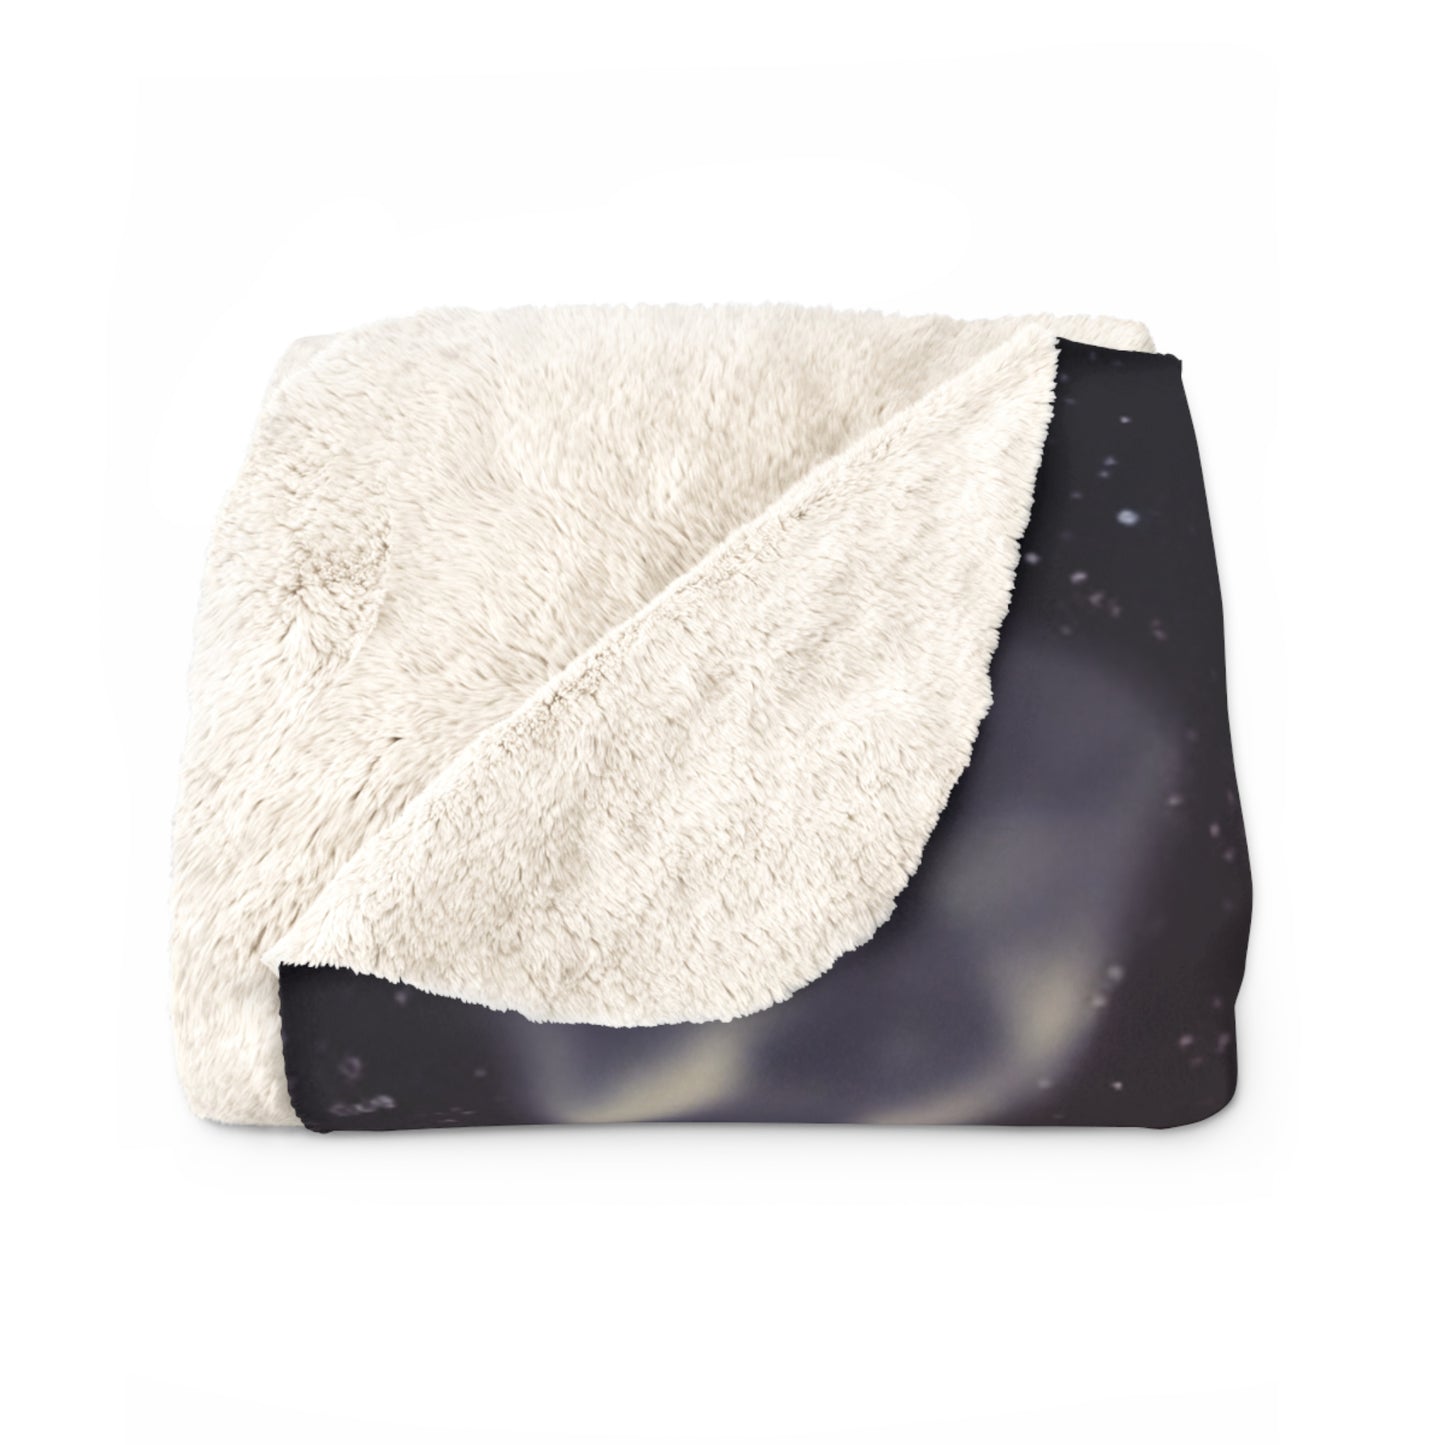 Galactic Adventurer - Celestial Star Art: Deep Space Exploration - Sherpa Fleece Blanket